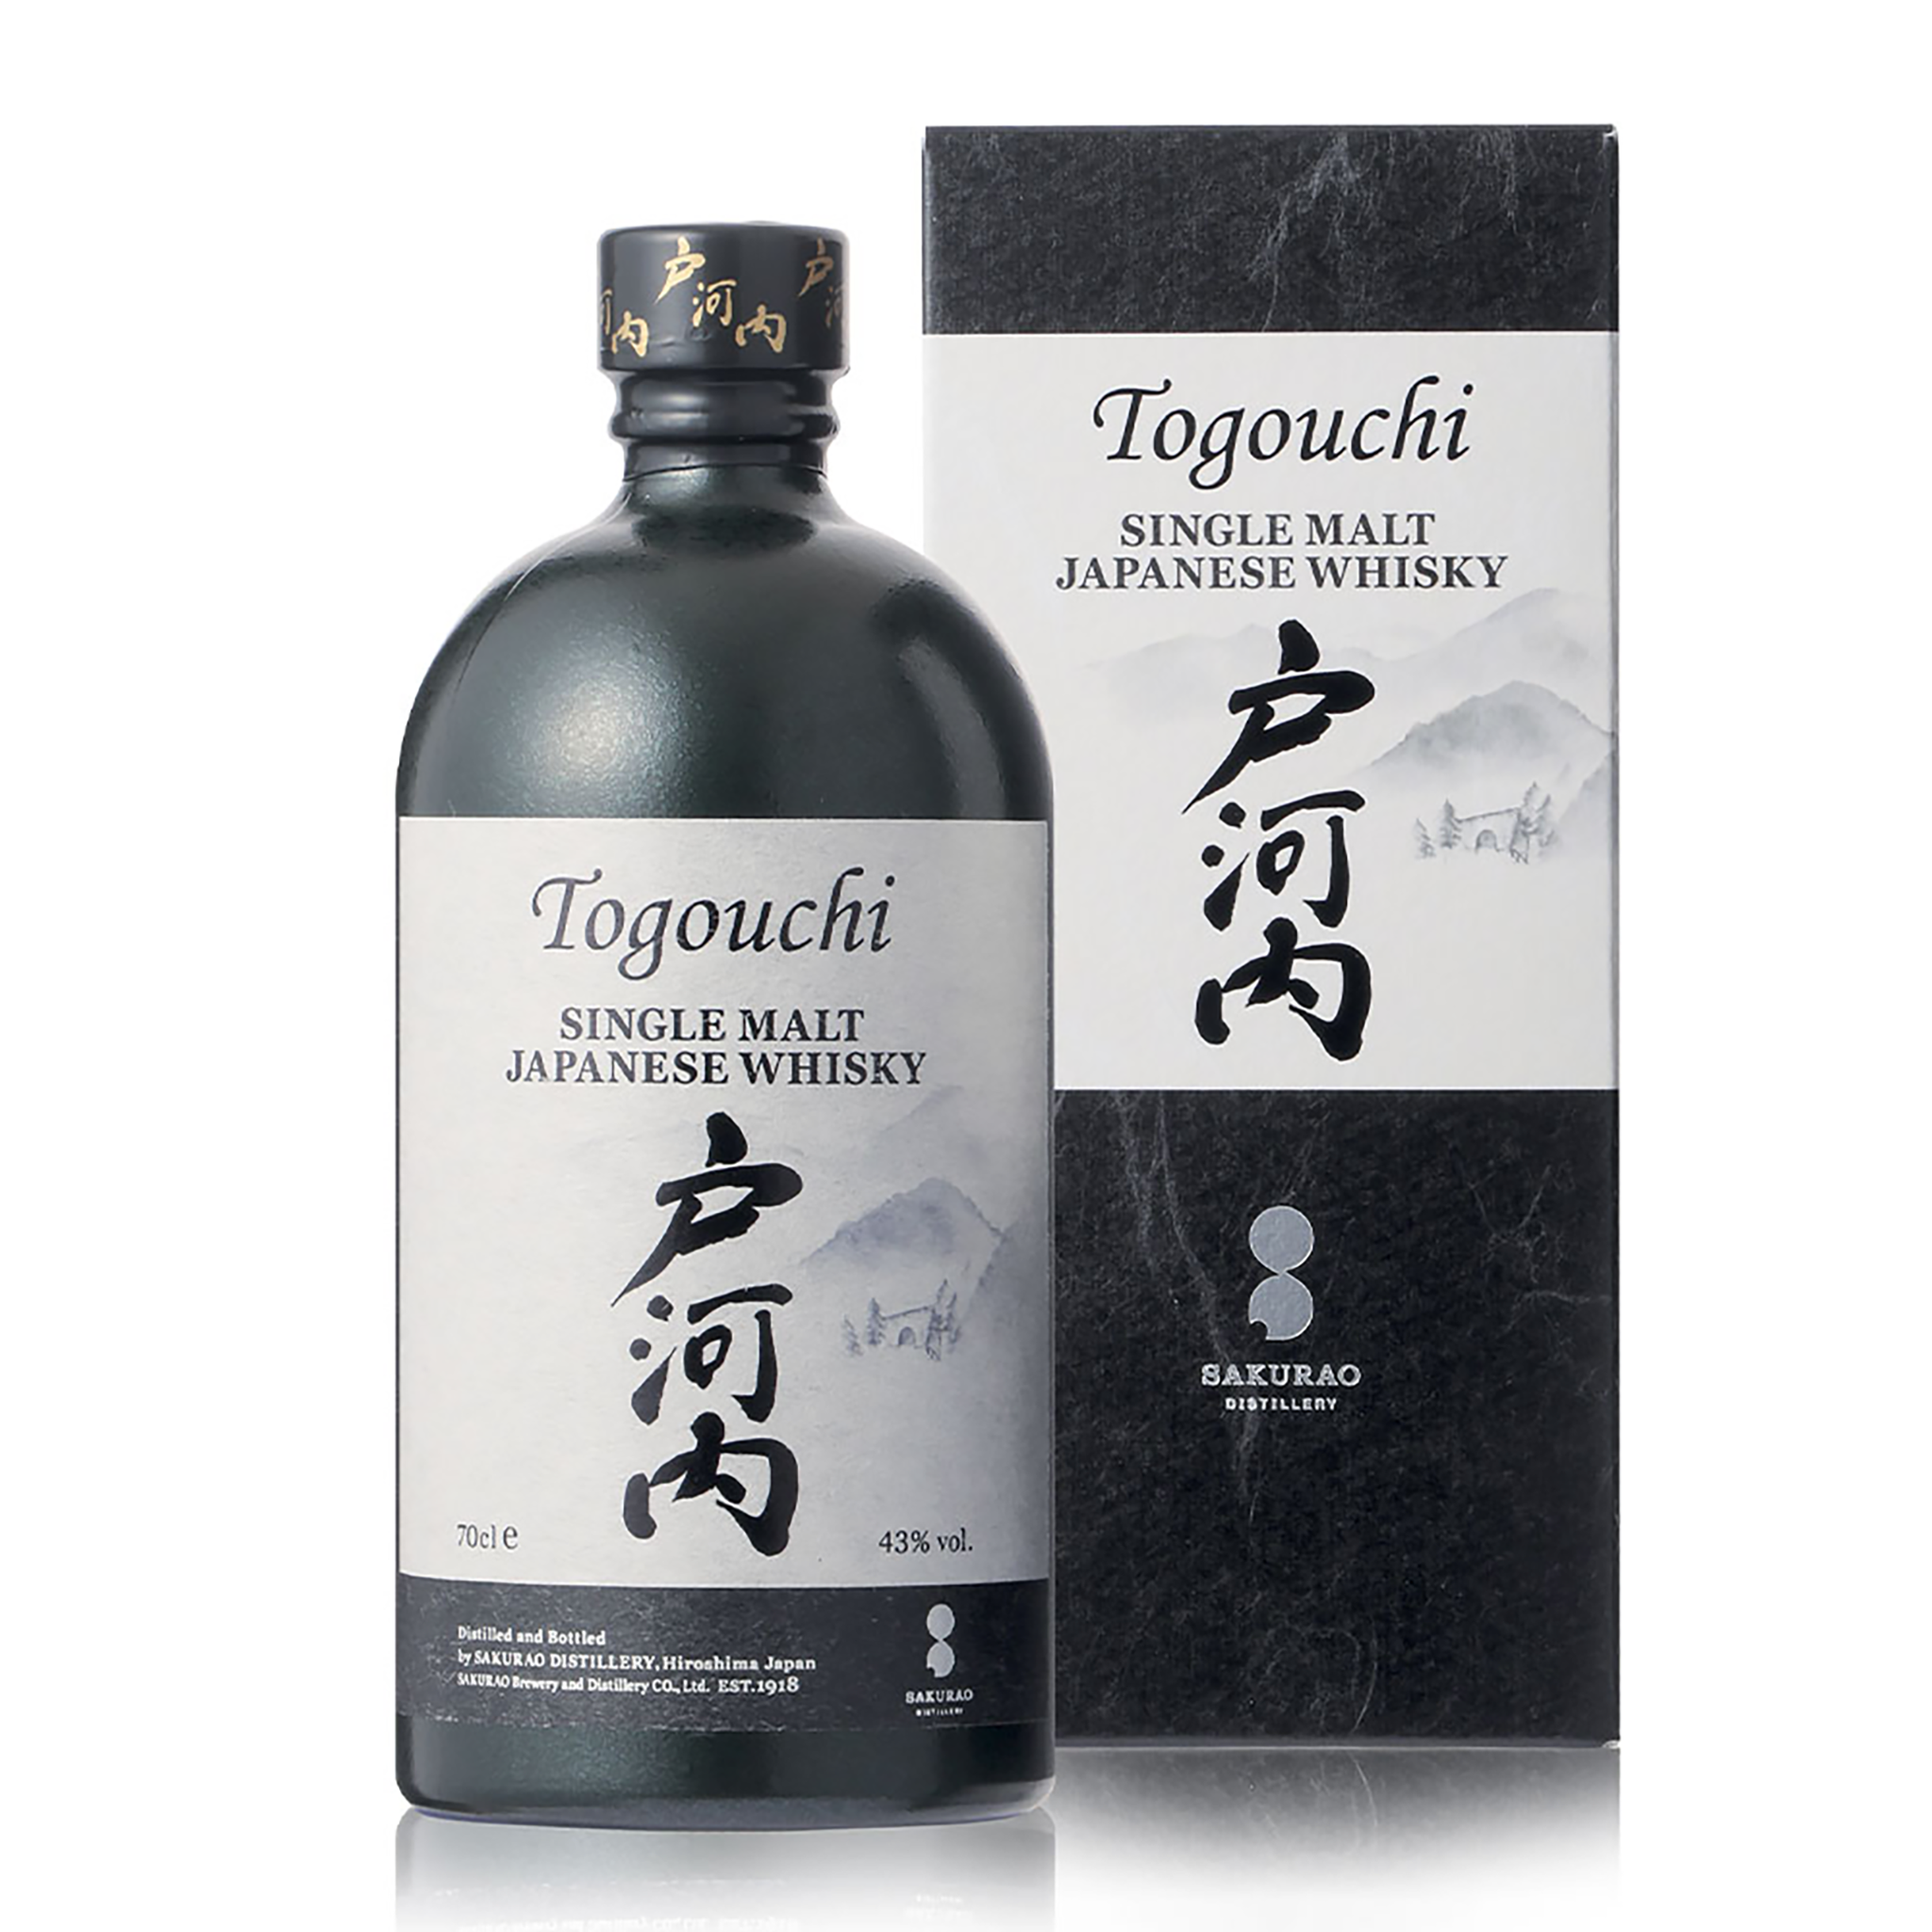 Togouchi No Age Premium Blended Whisky